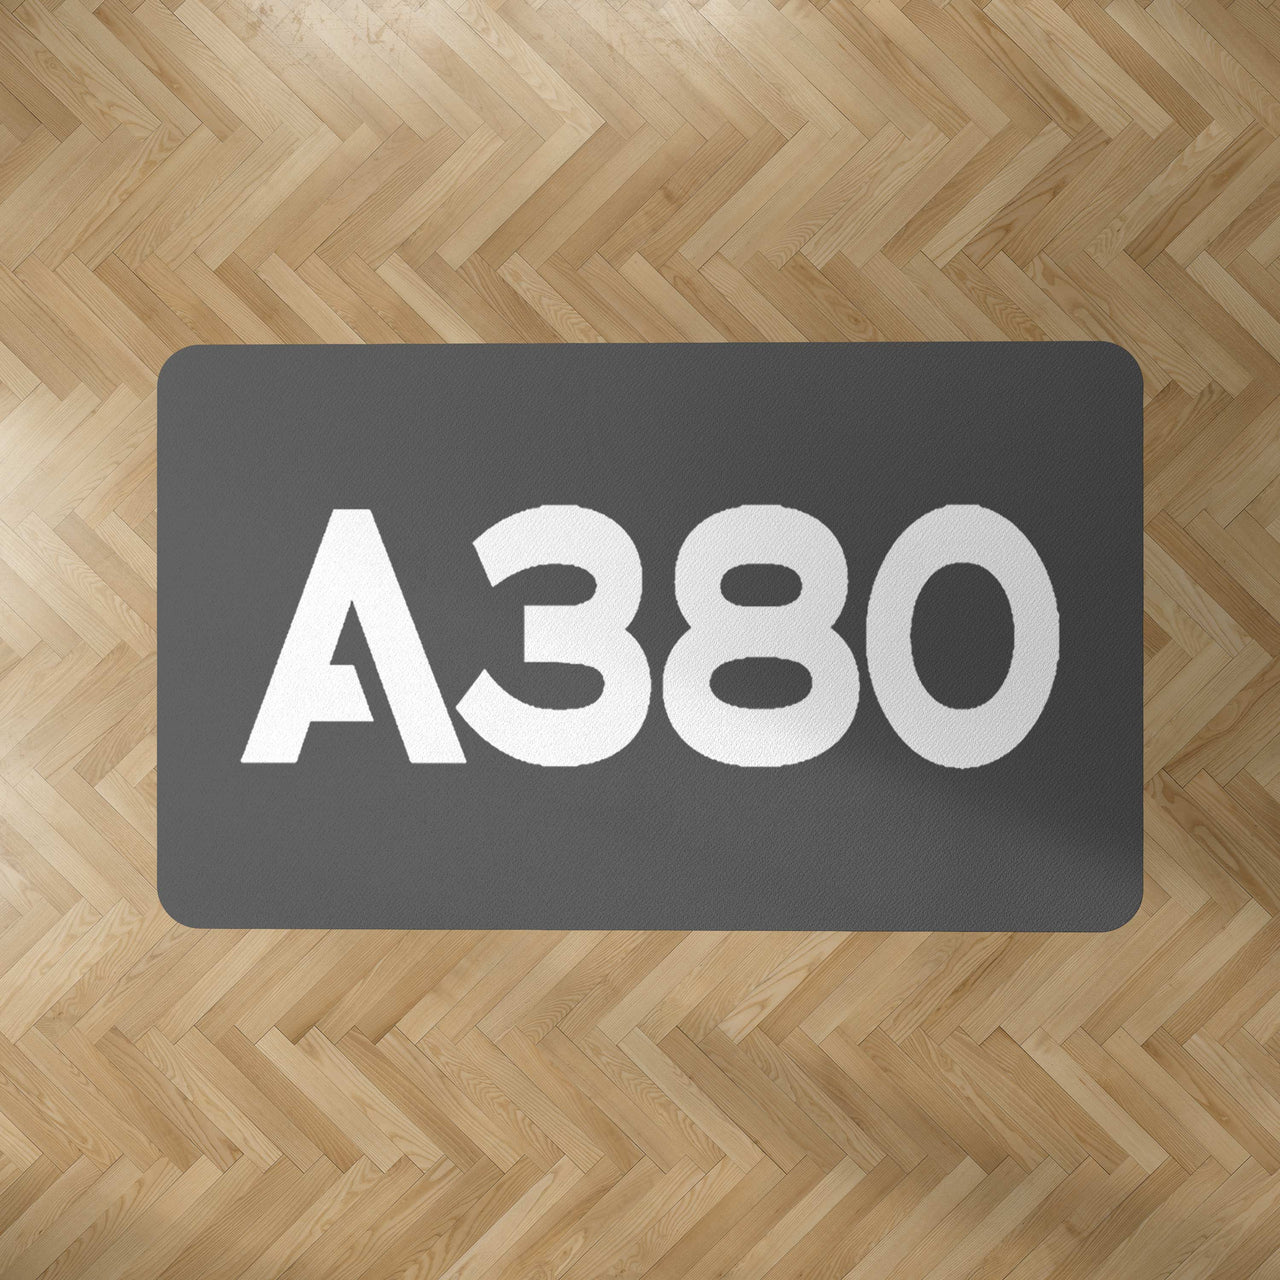 A380 Flat Text Designed Carpet & Floor Mats